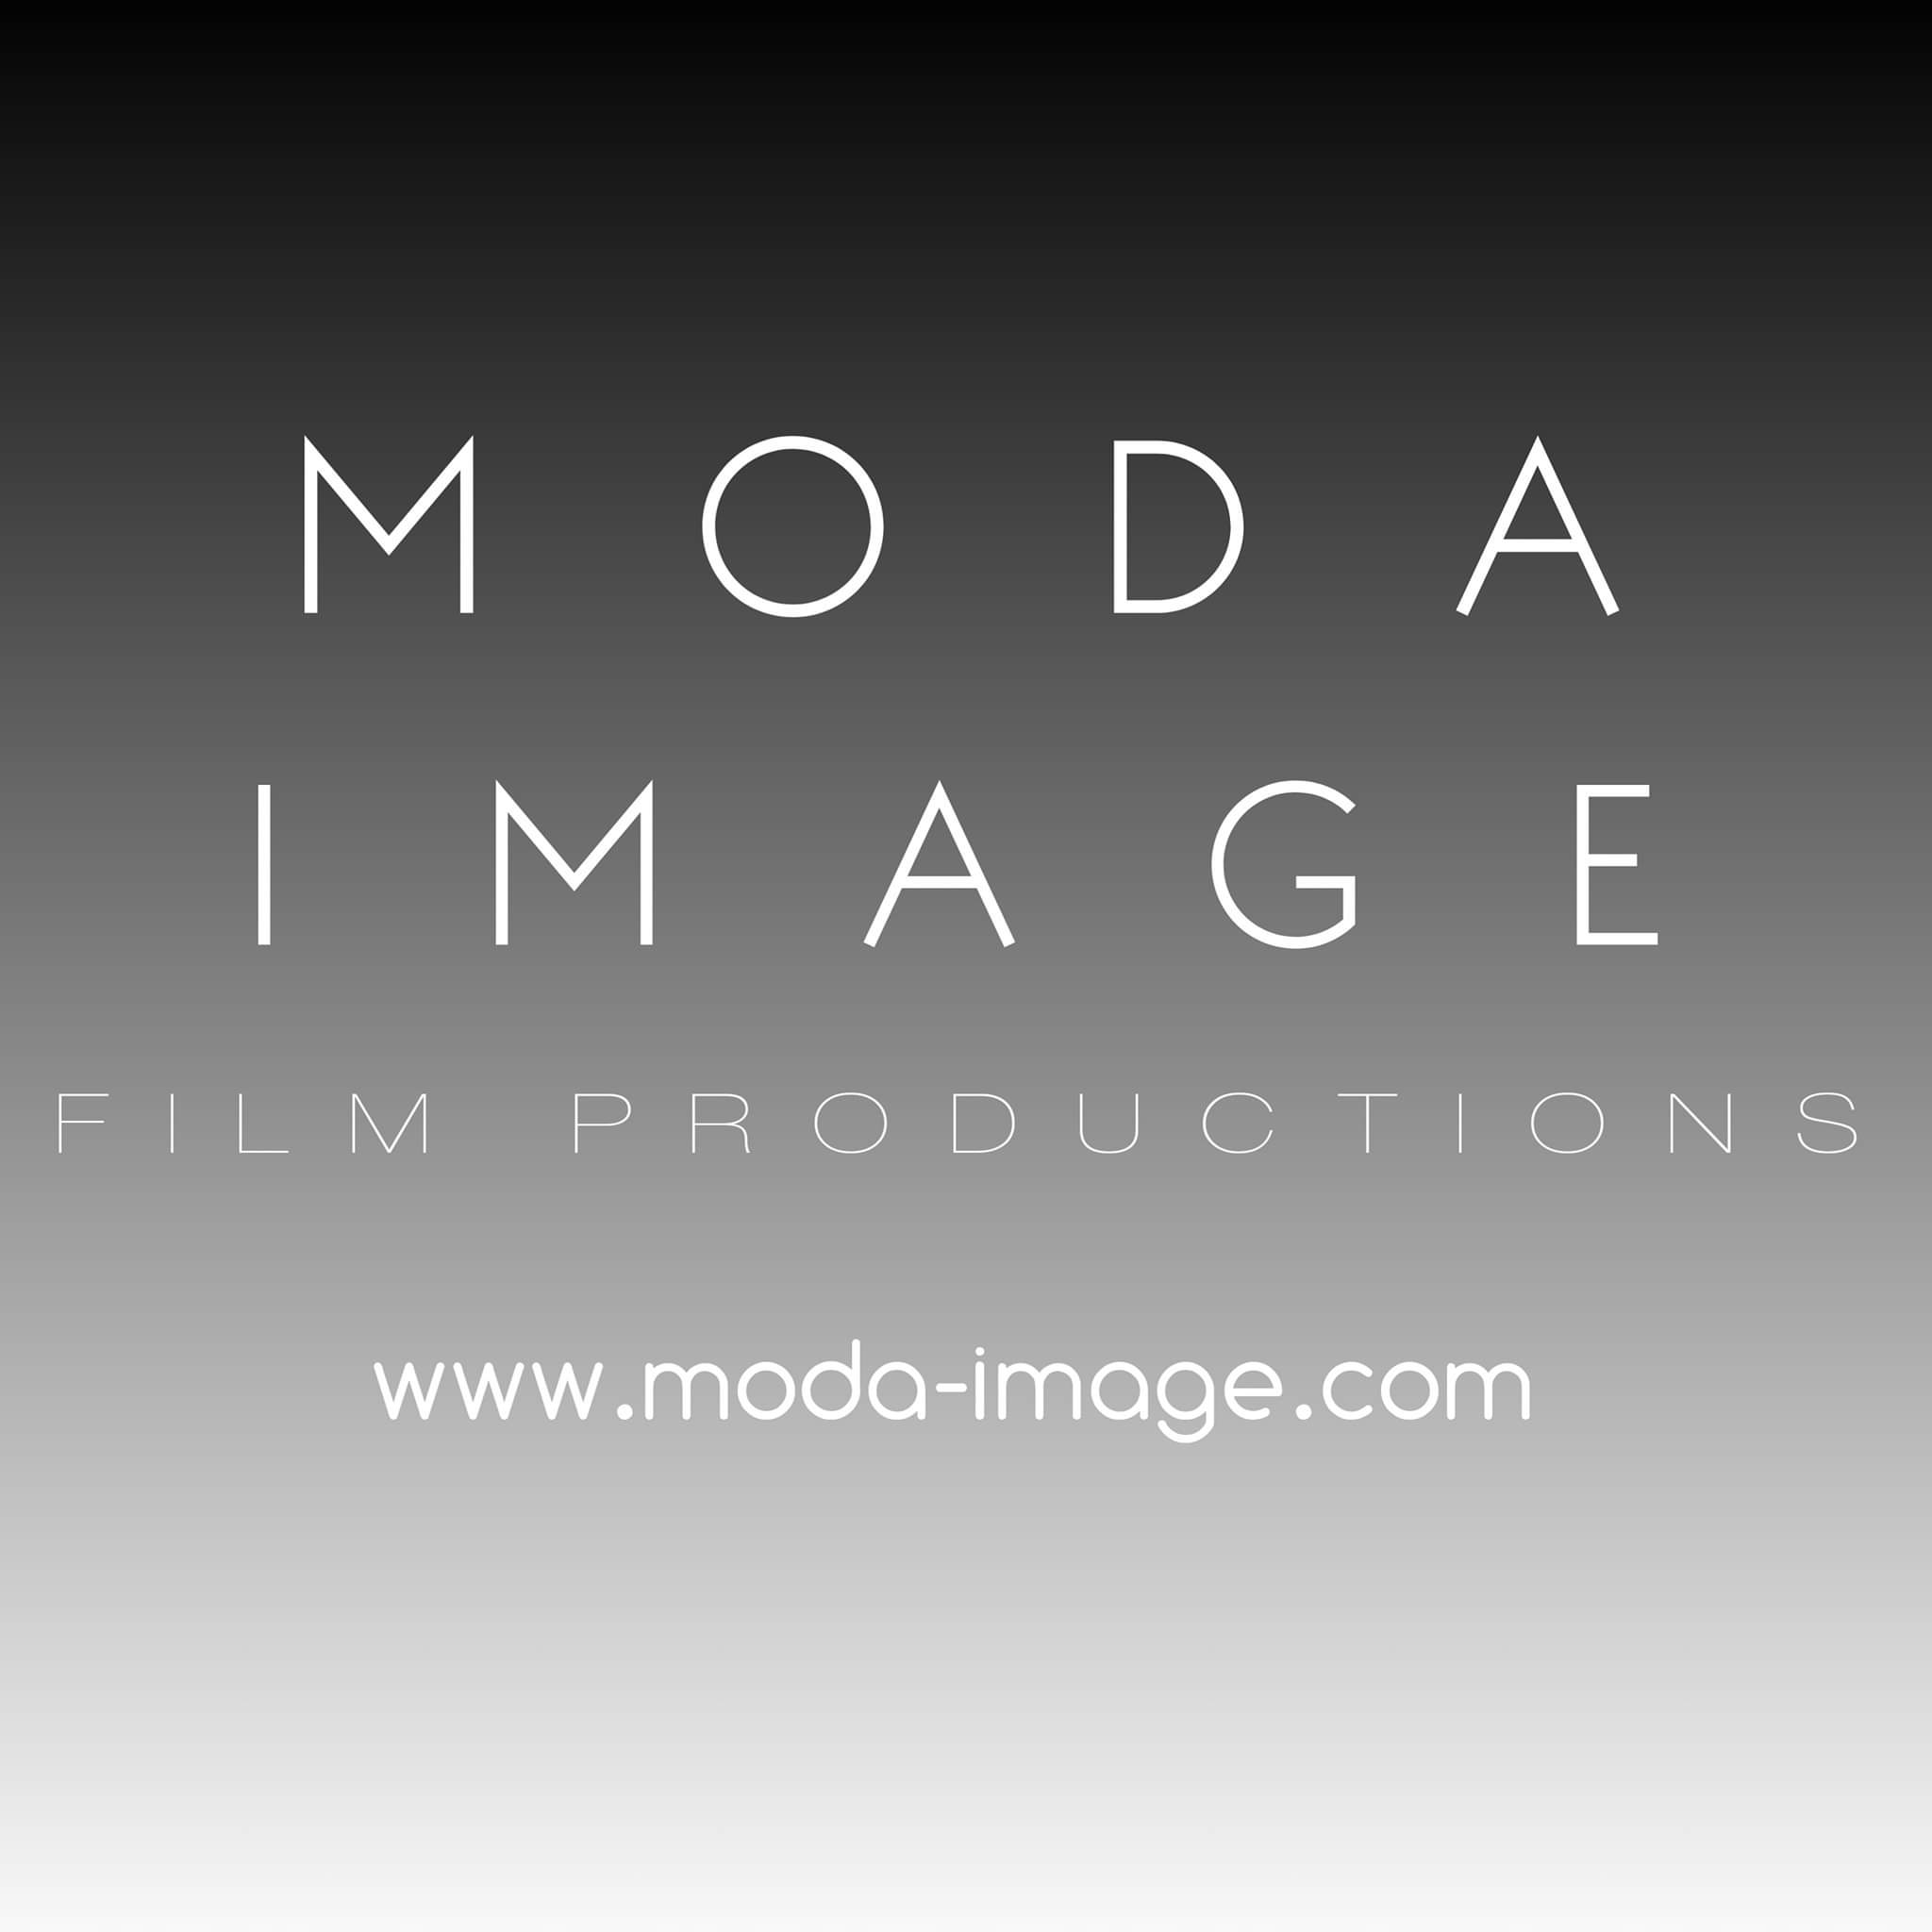 Moda Image Film Productions